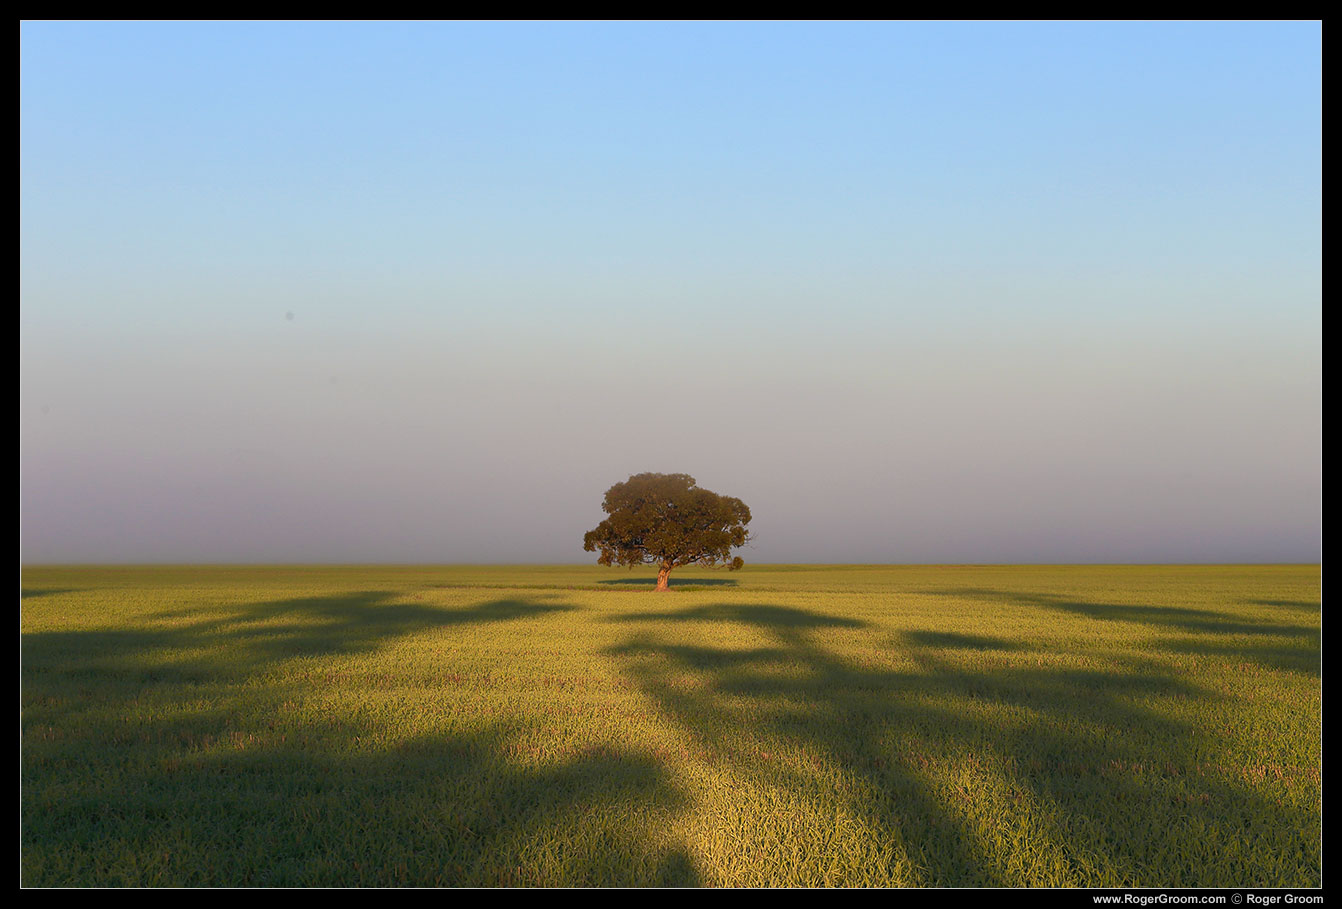 Wheatfield with lone tree in mist.